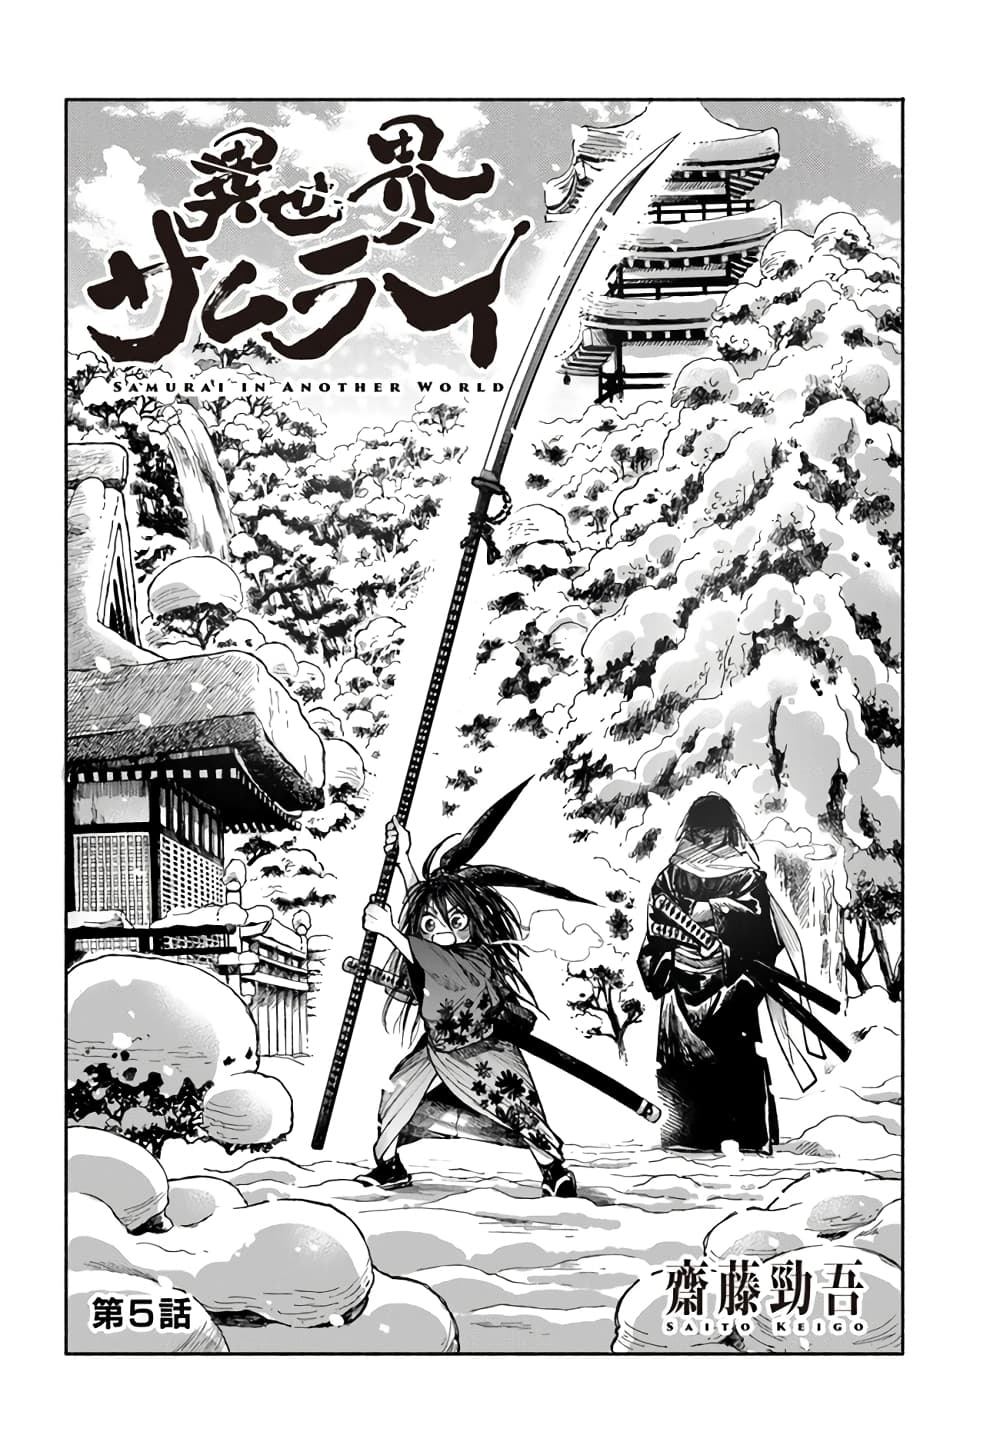 Samurai in Another World ตอนที่ 5 (1)